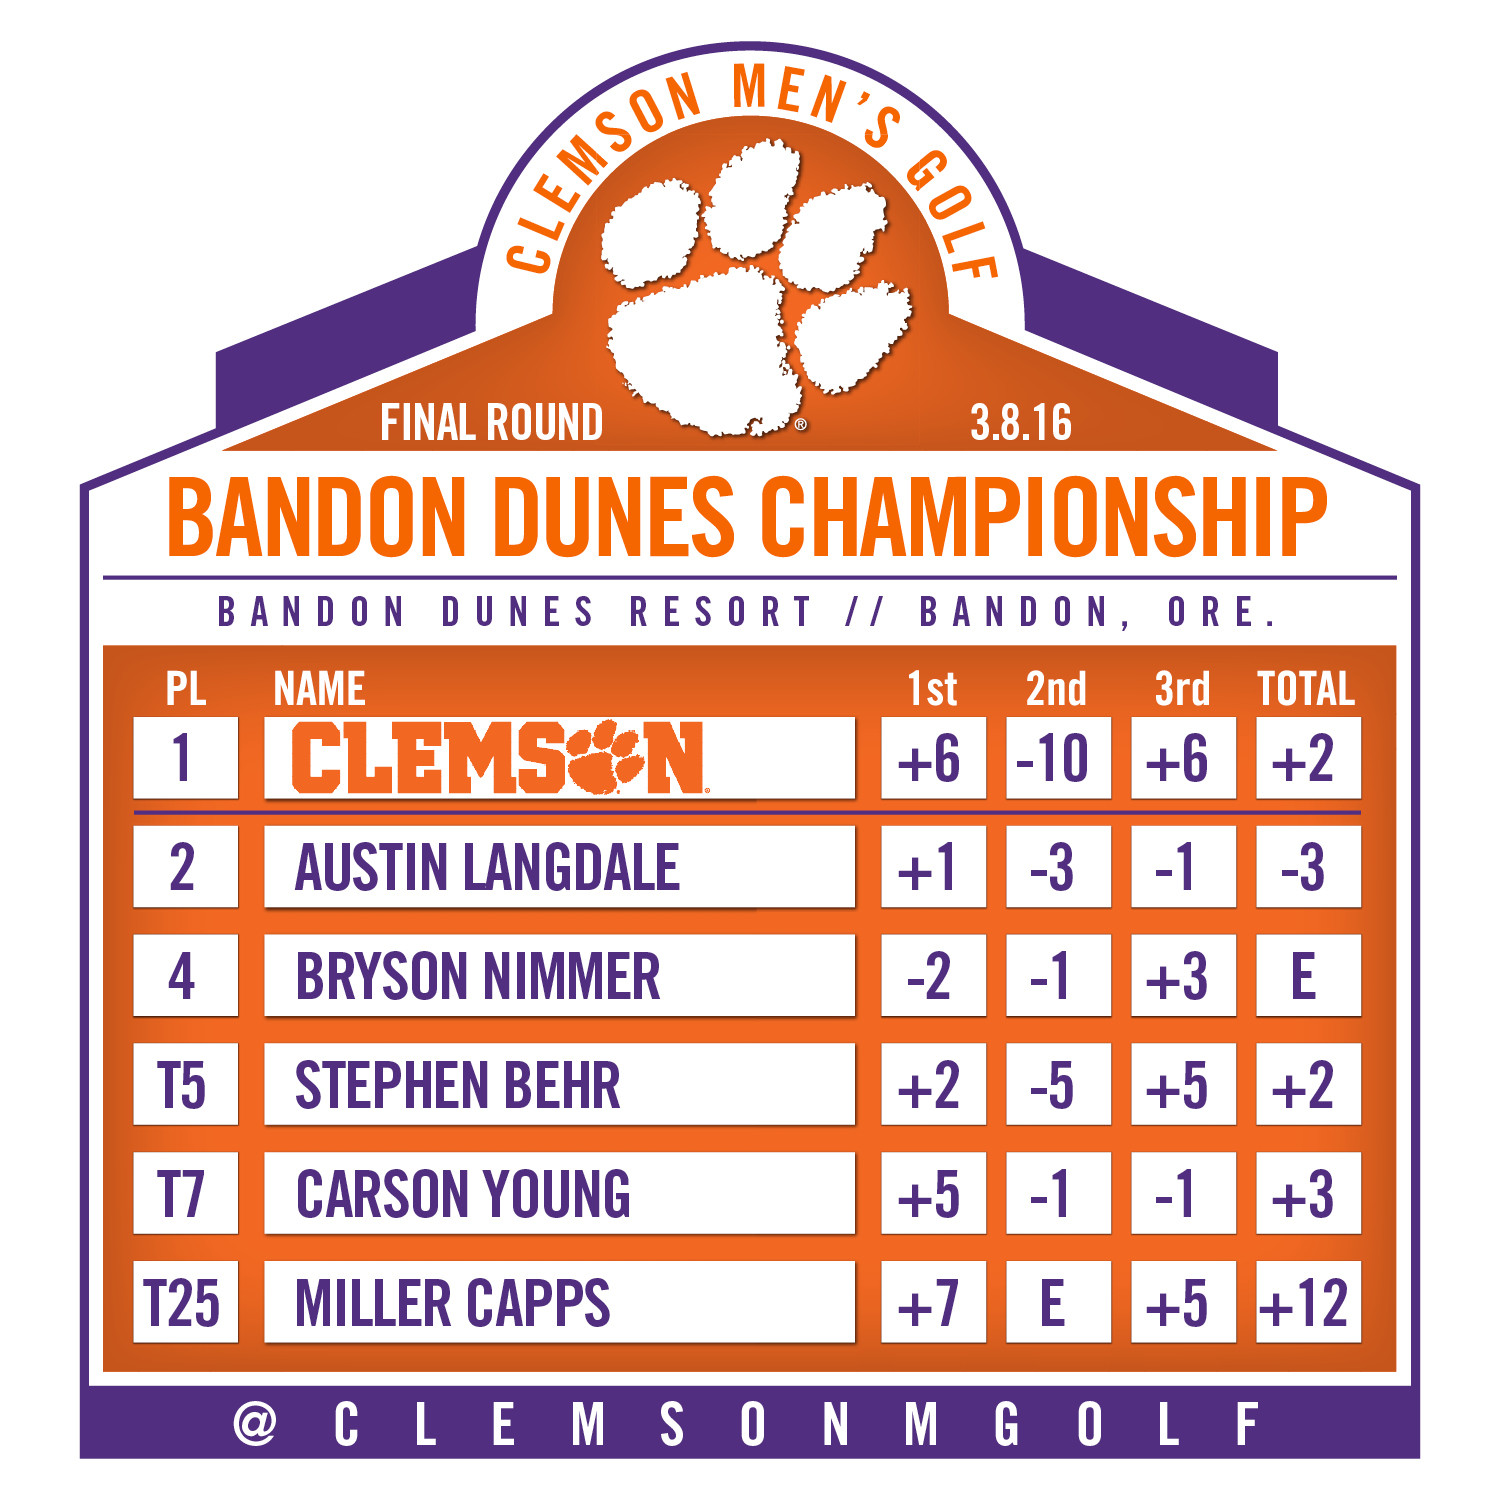 Clemson wins Bandon Dunes Championship